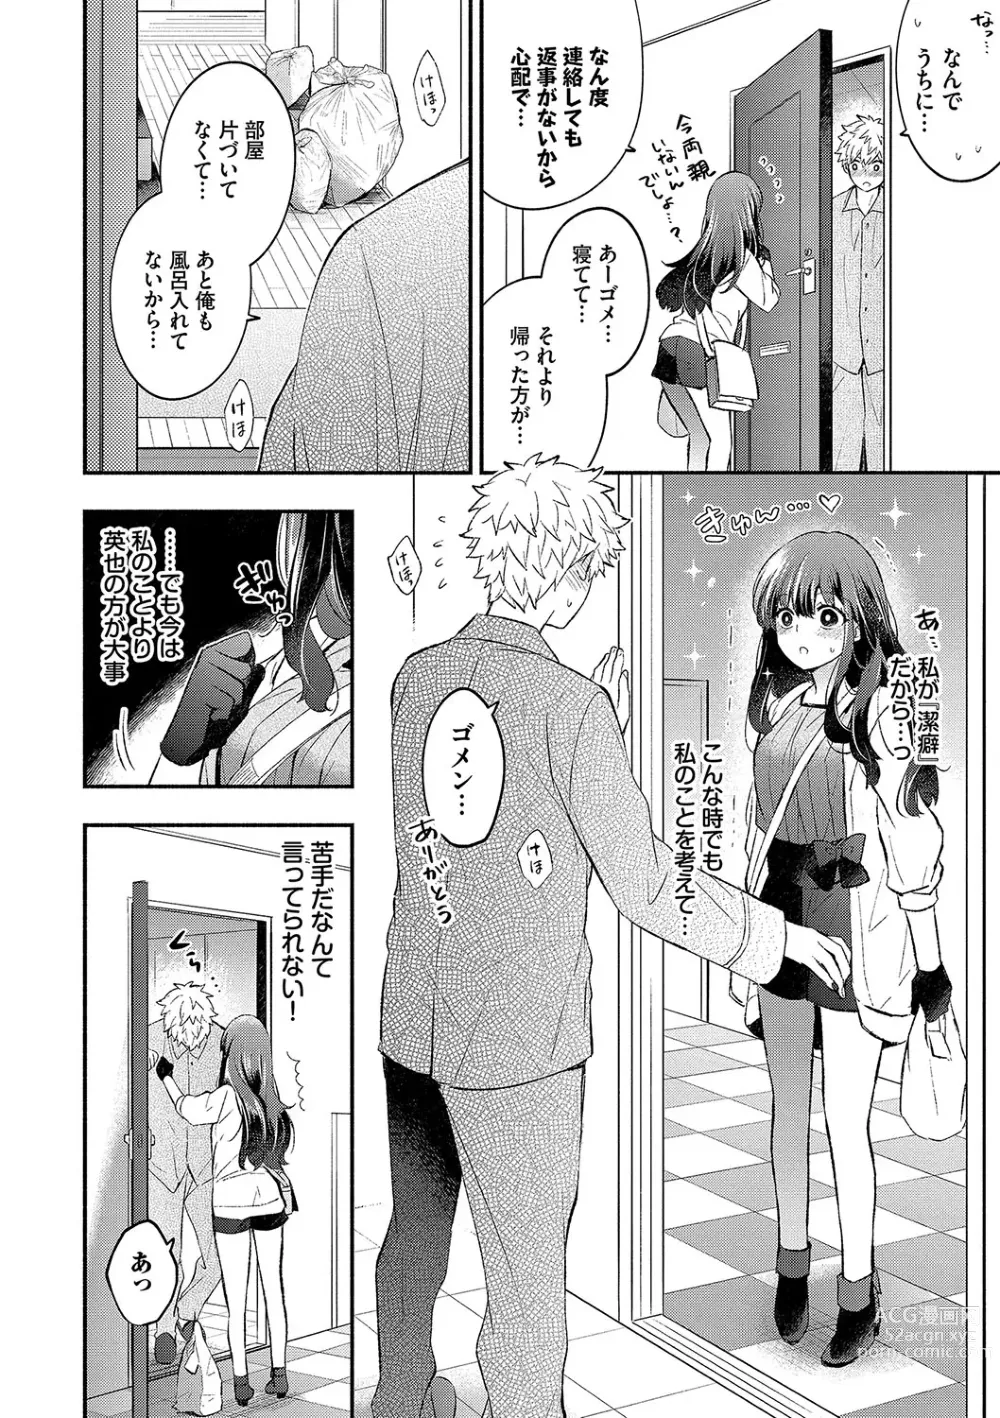 Page 29 of manga Junai Porno - Pure Love Porno